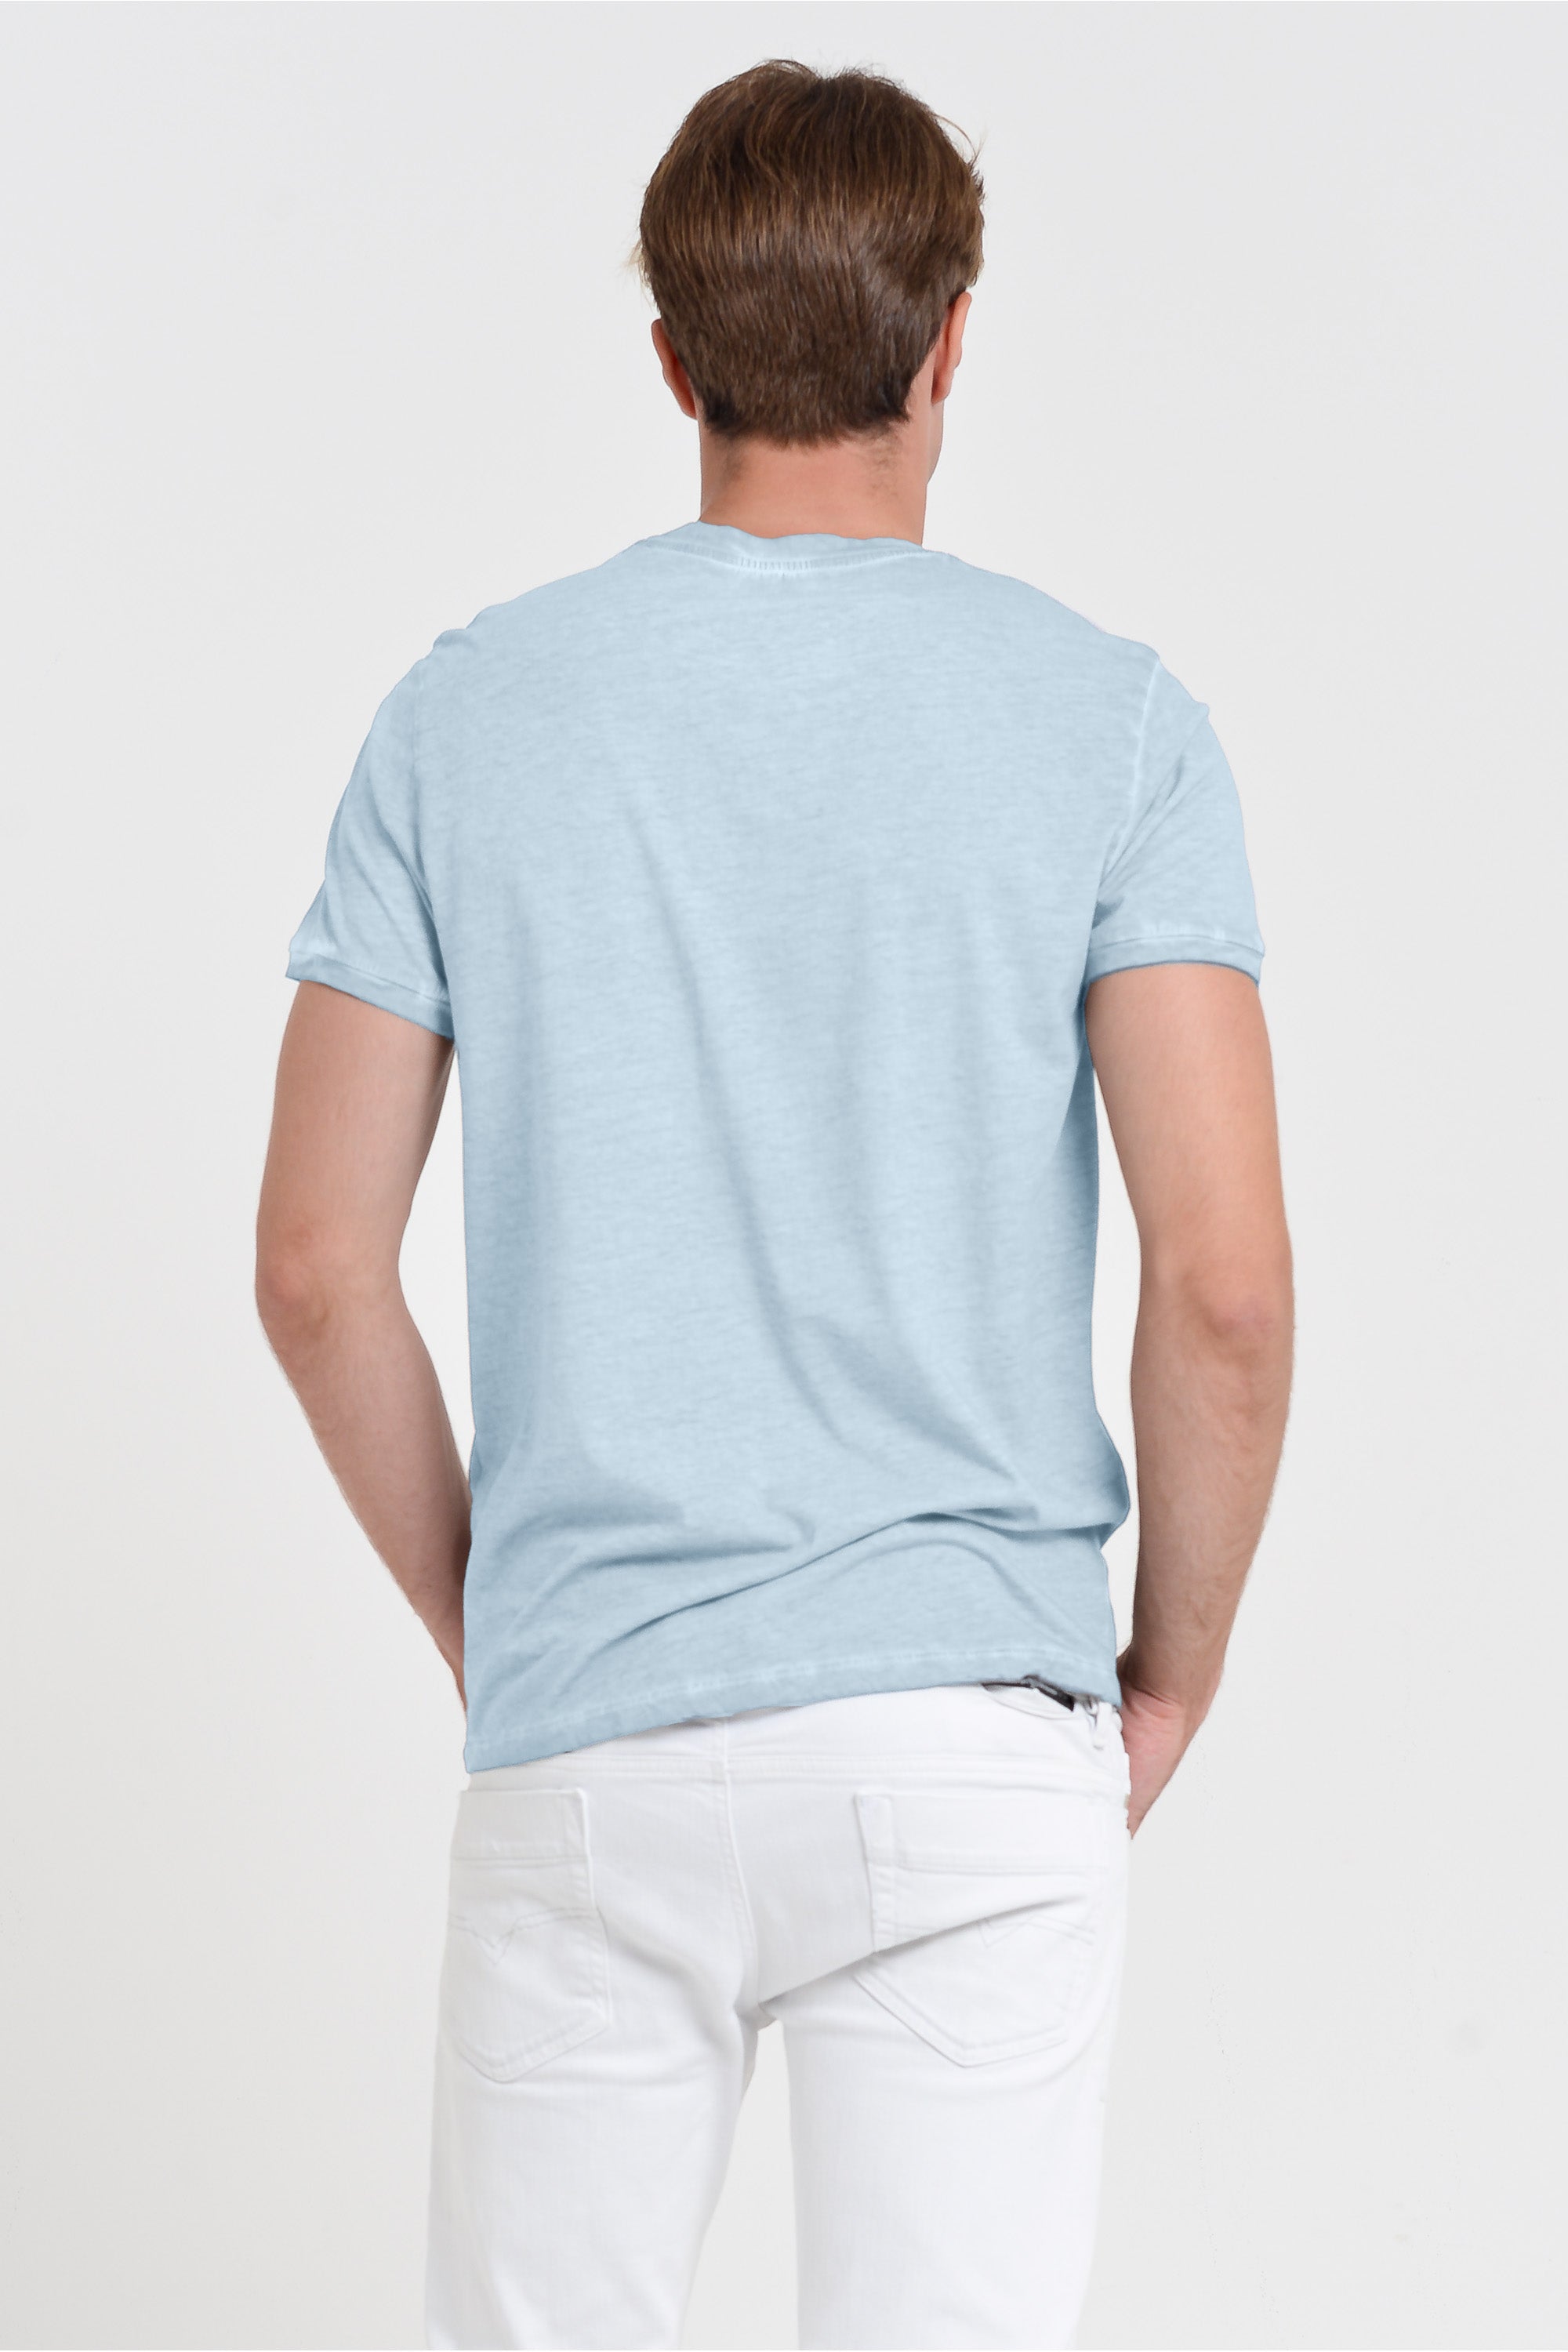 Smart Casual Cotton T-Shirt - Anice